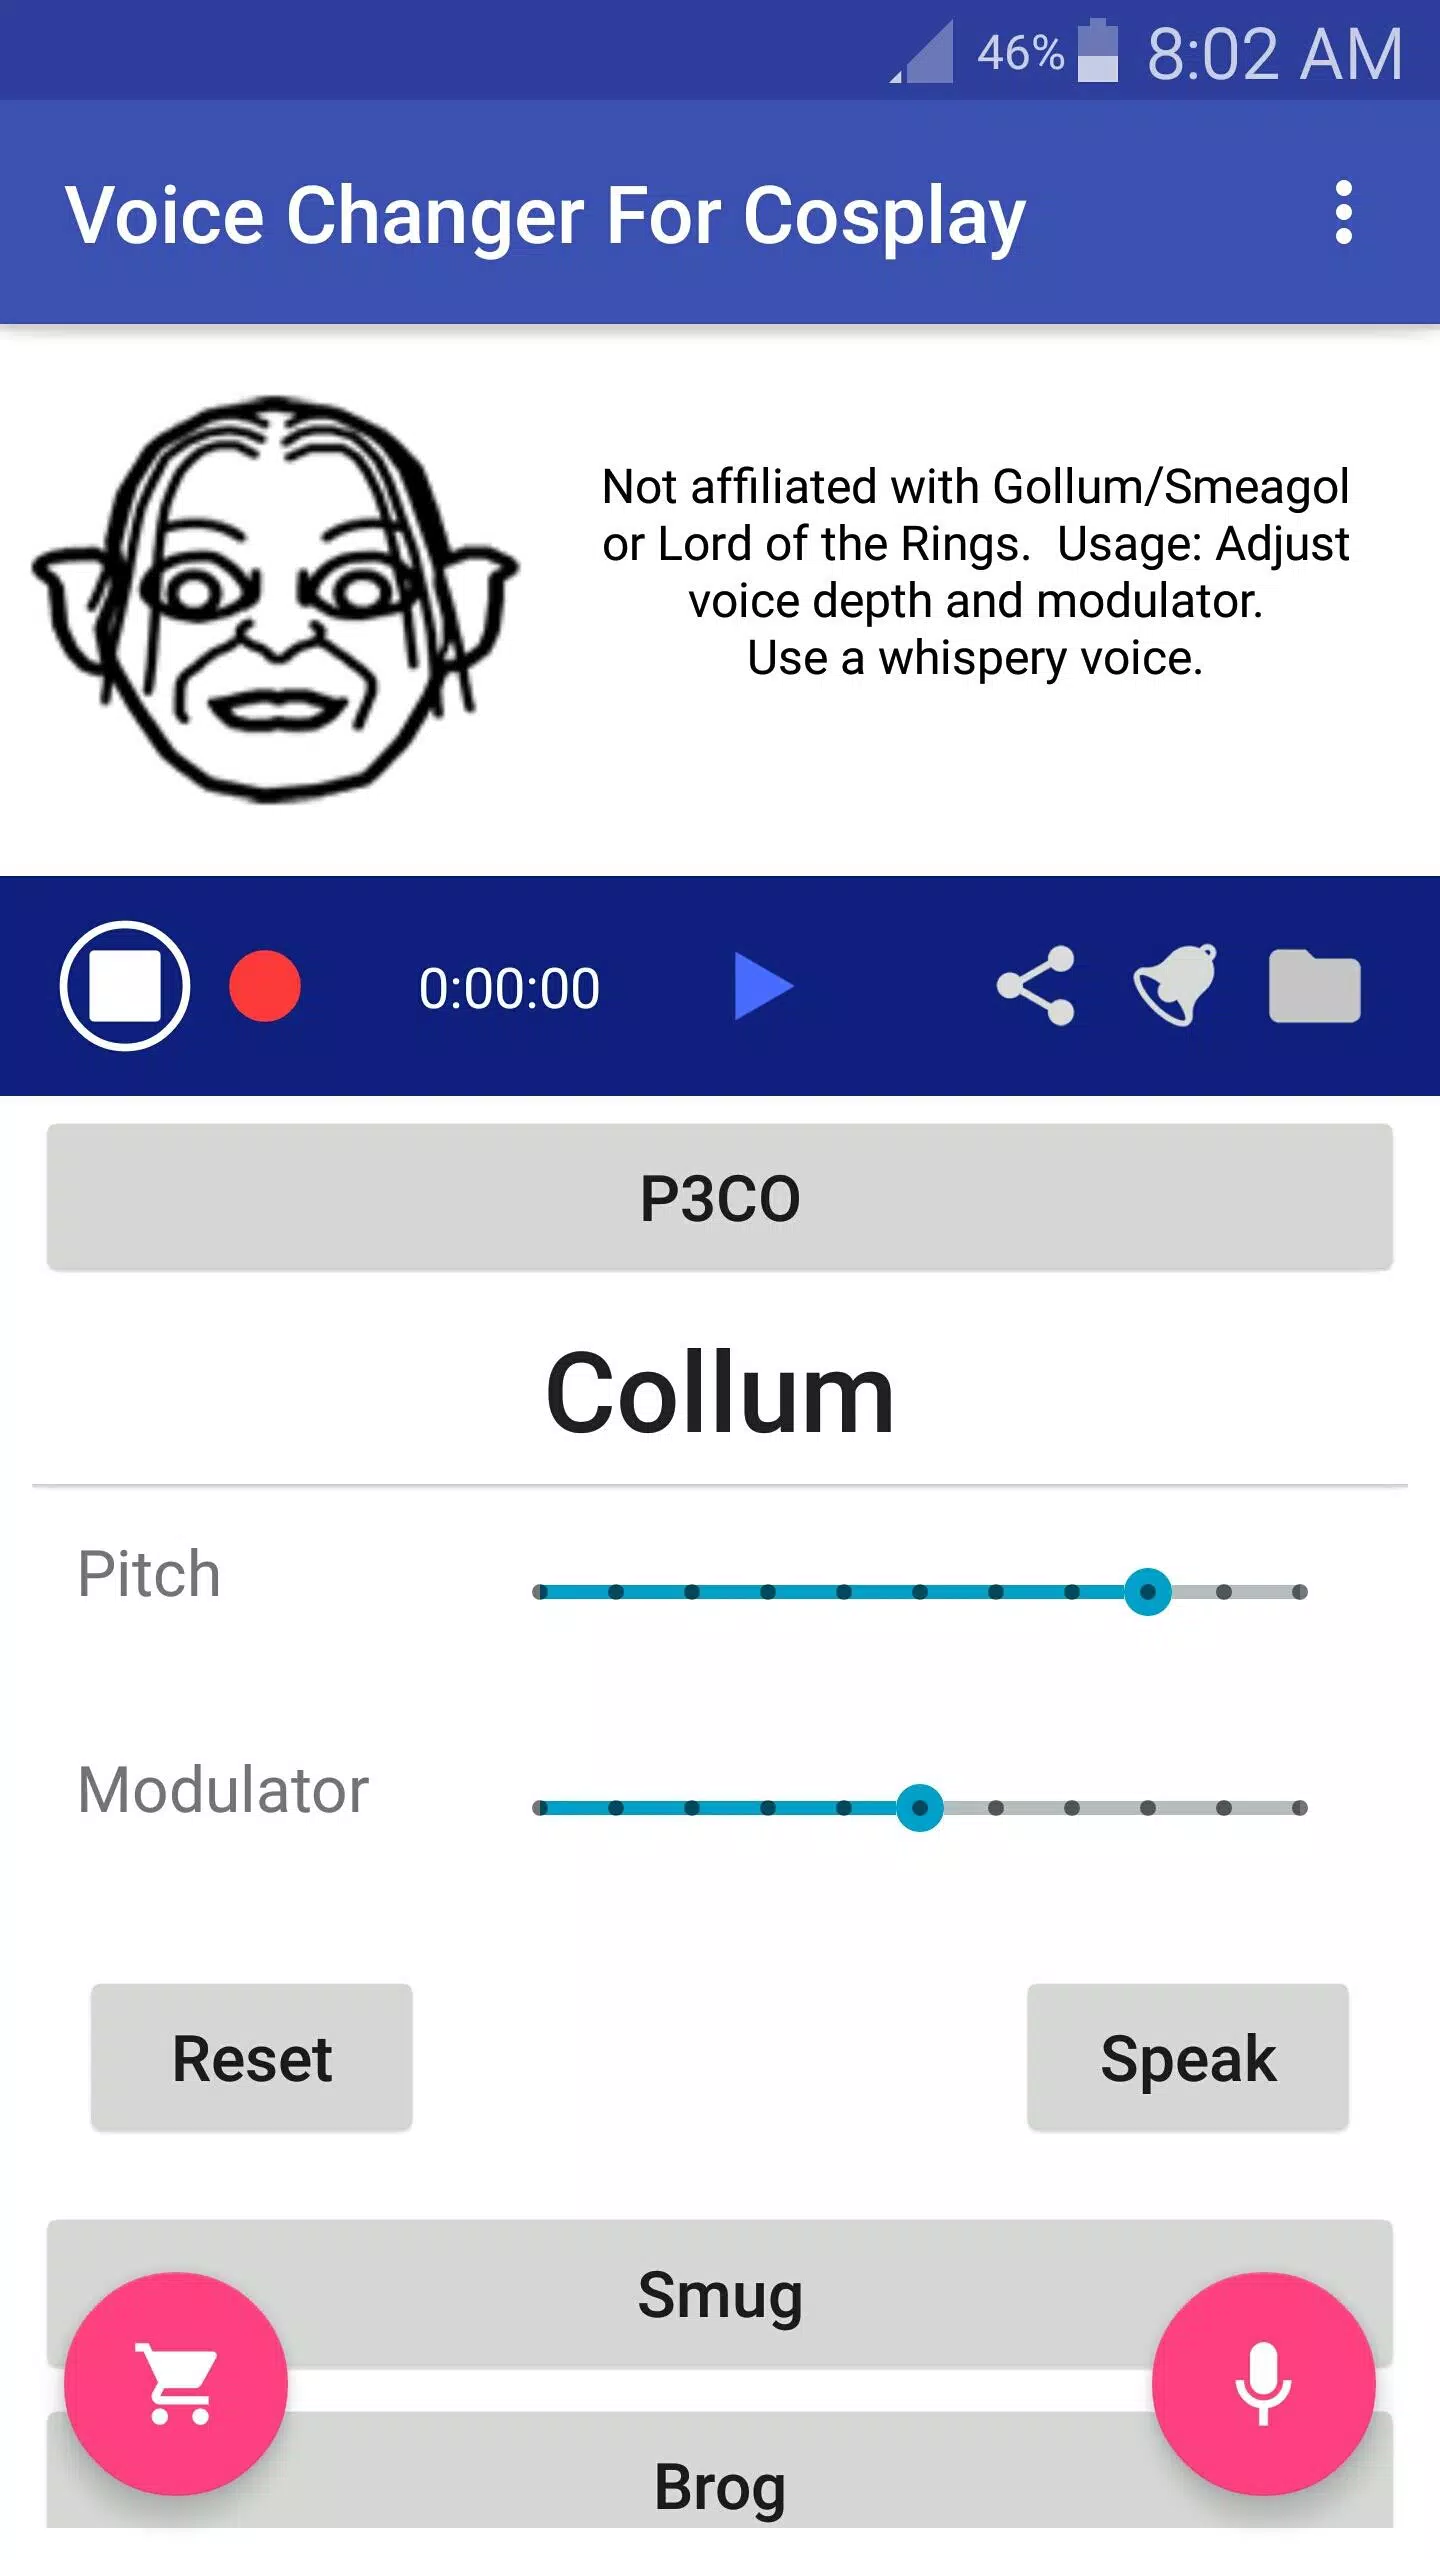 Voice changer mic. Voice Changer. Voice Changer с эффектами. Программа 2018 года для андроид the Voice Changer. Значок the Voice Changer.